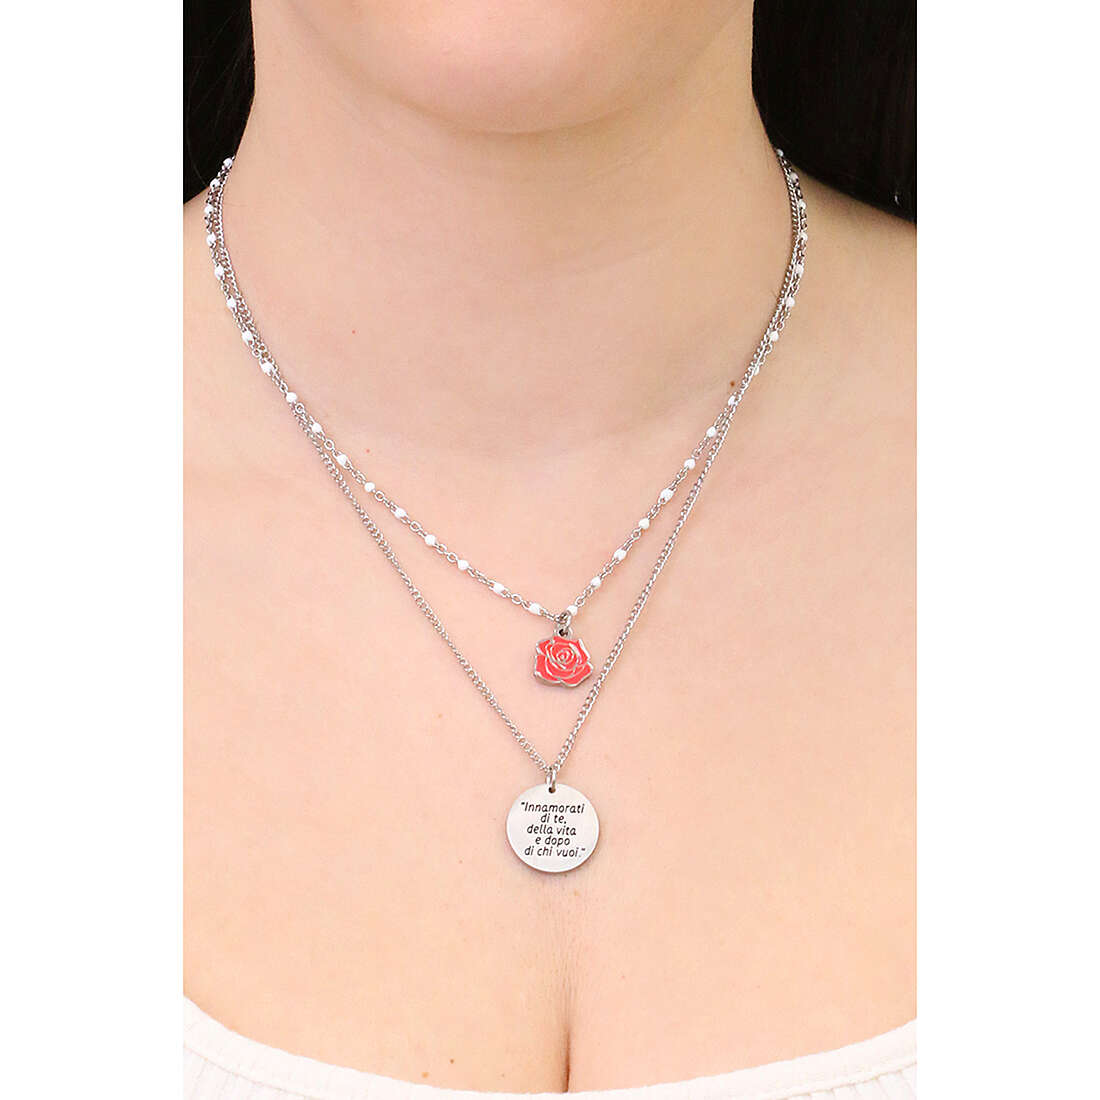 Kidult necklaces Philosophy woman 751150 wearing